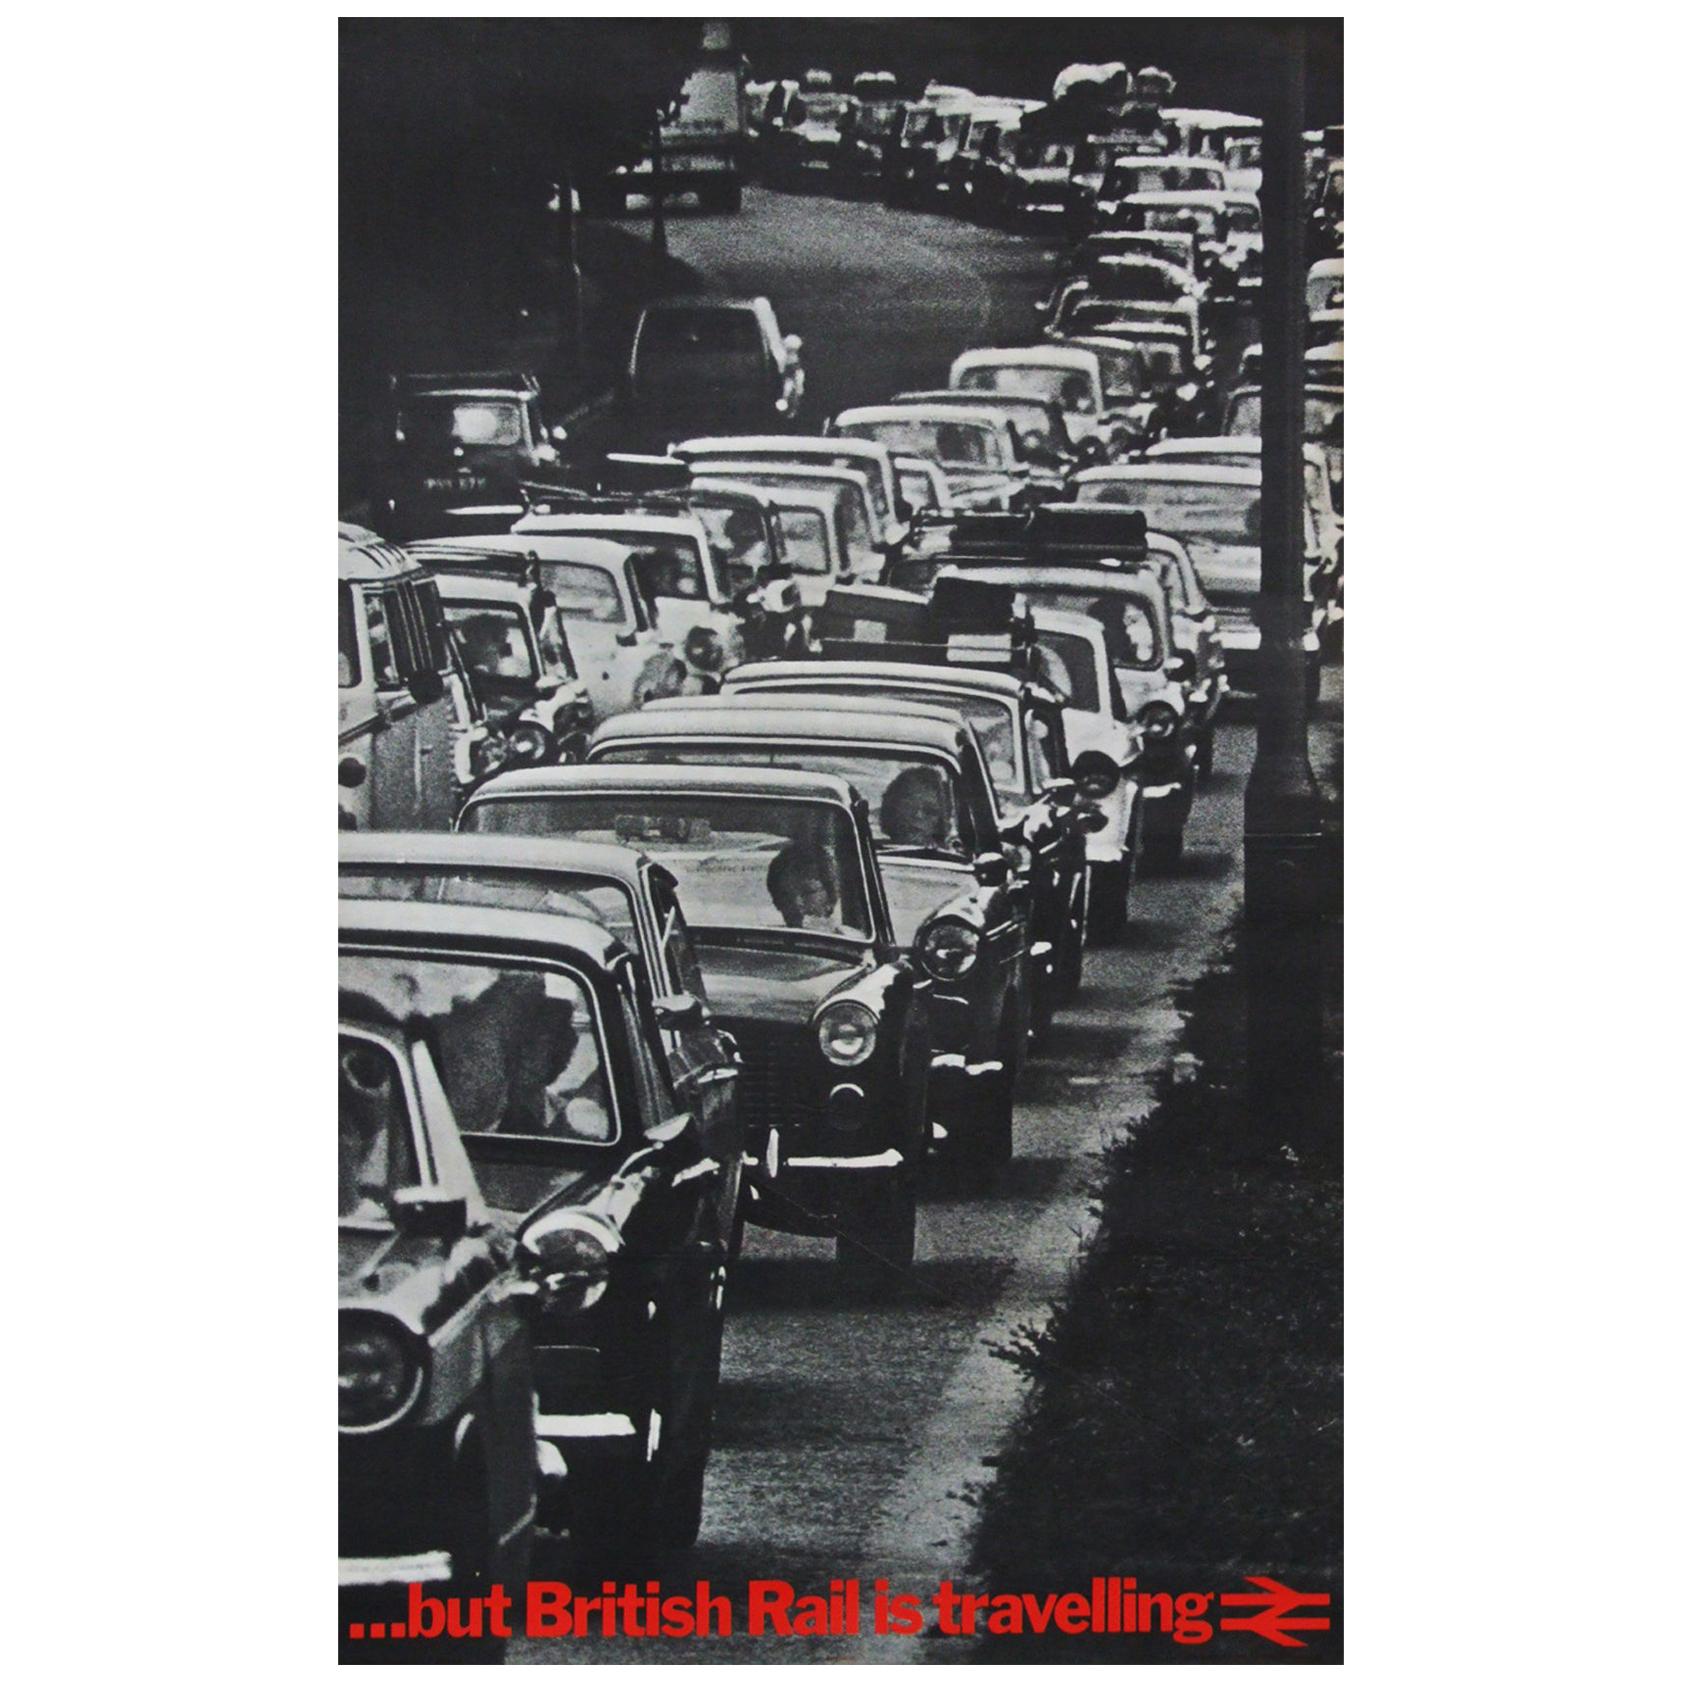 1970s Rare British Rail Travel Poster Classic Cars Traffic Jam